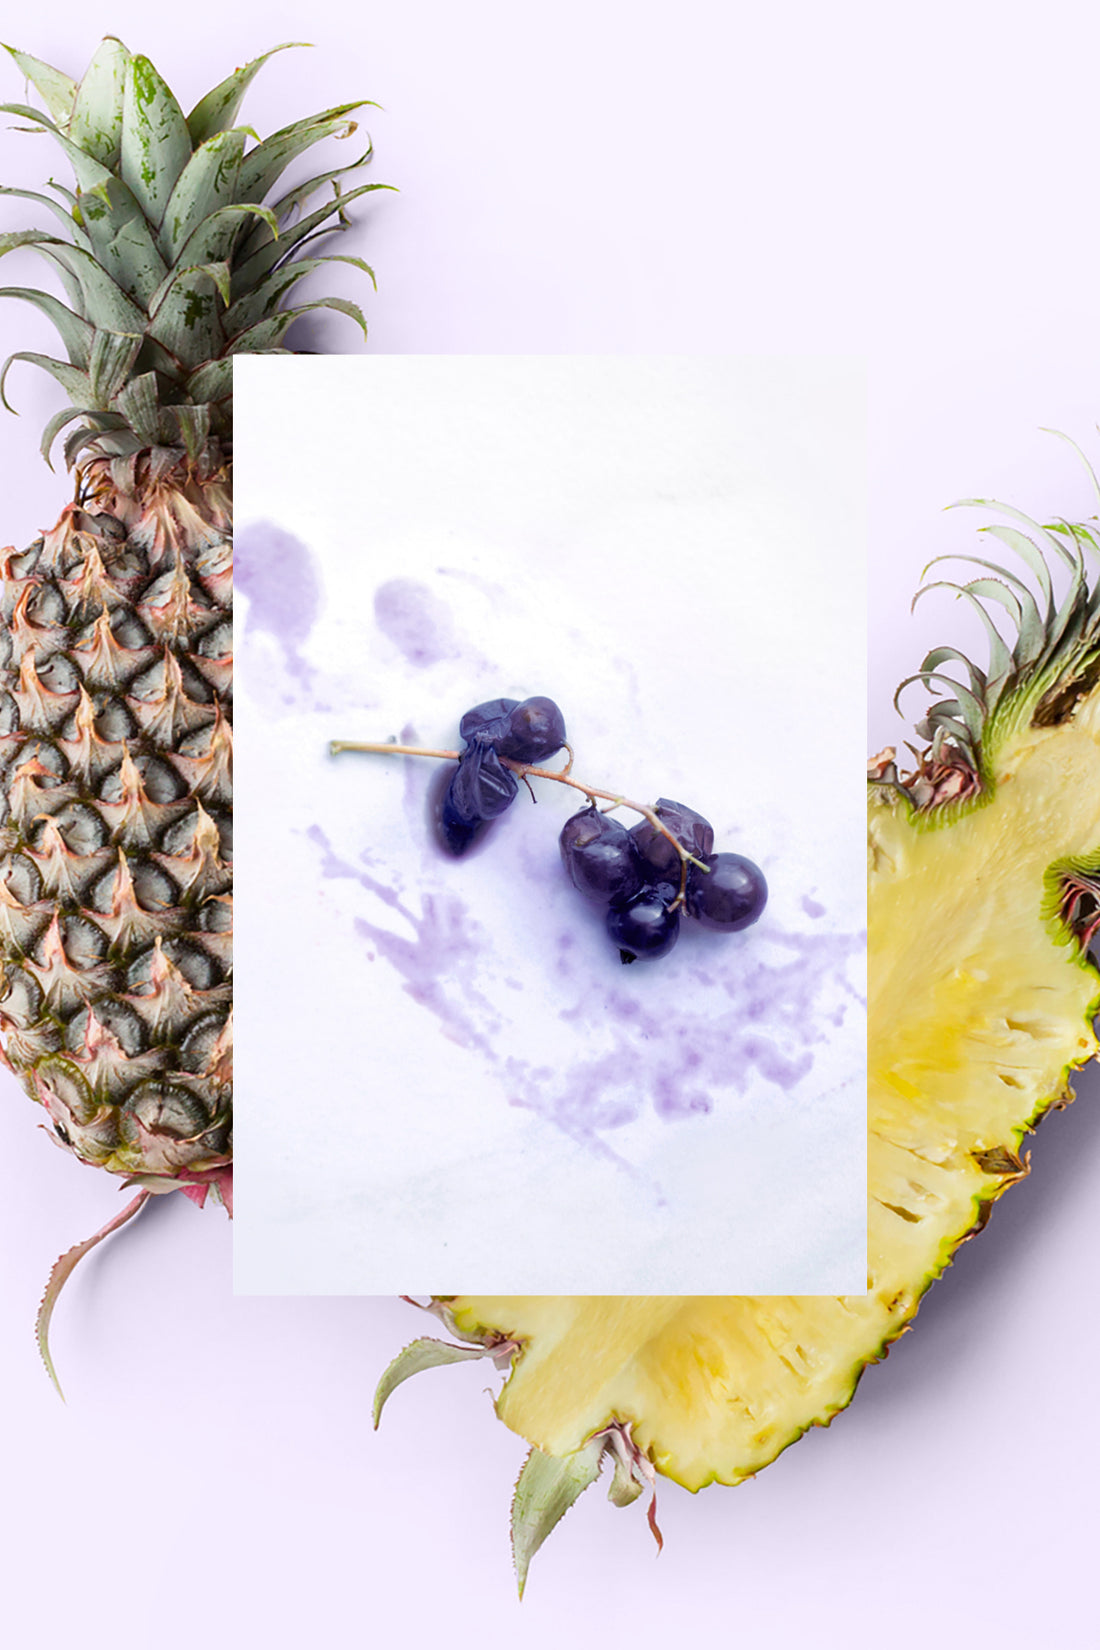 Maqui Berry Image on Pineapple Cut in Half